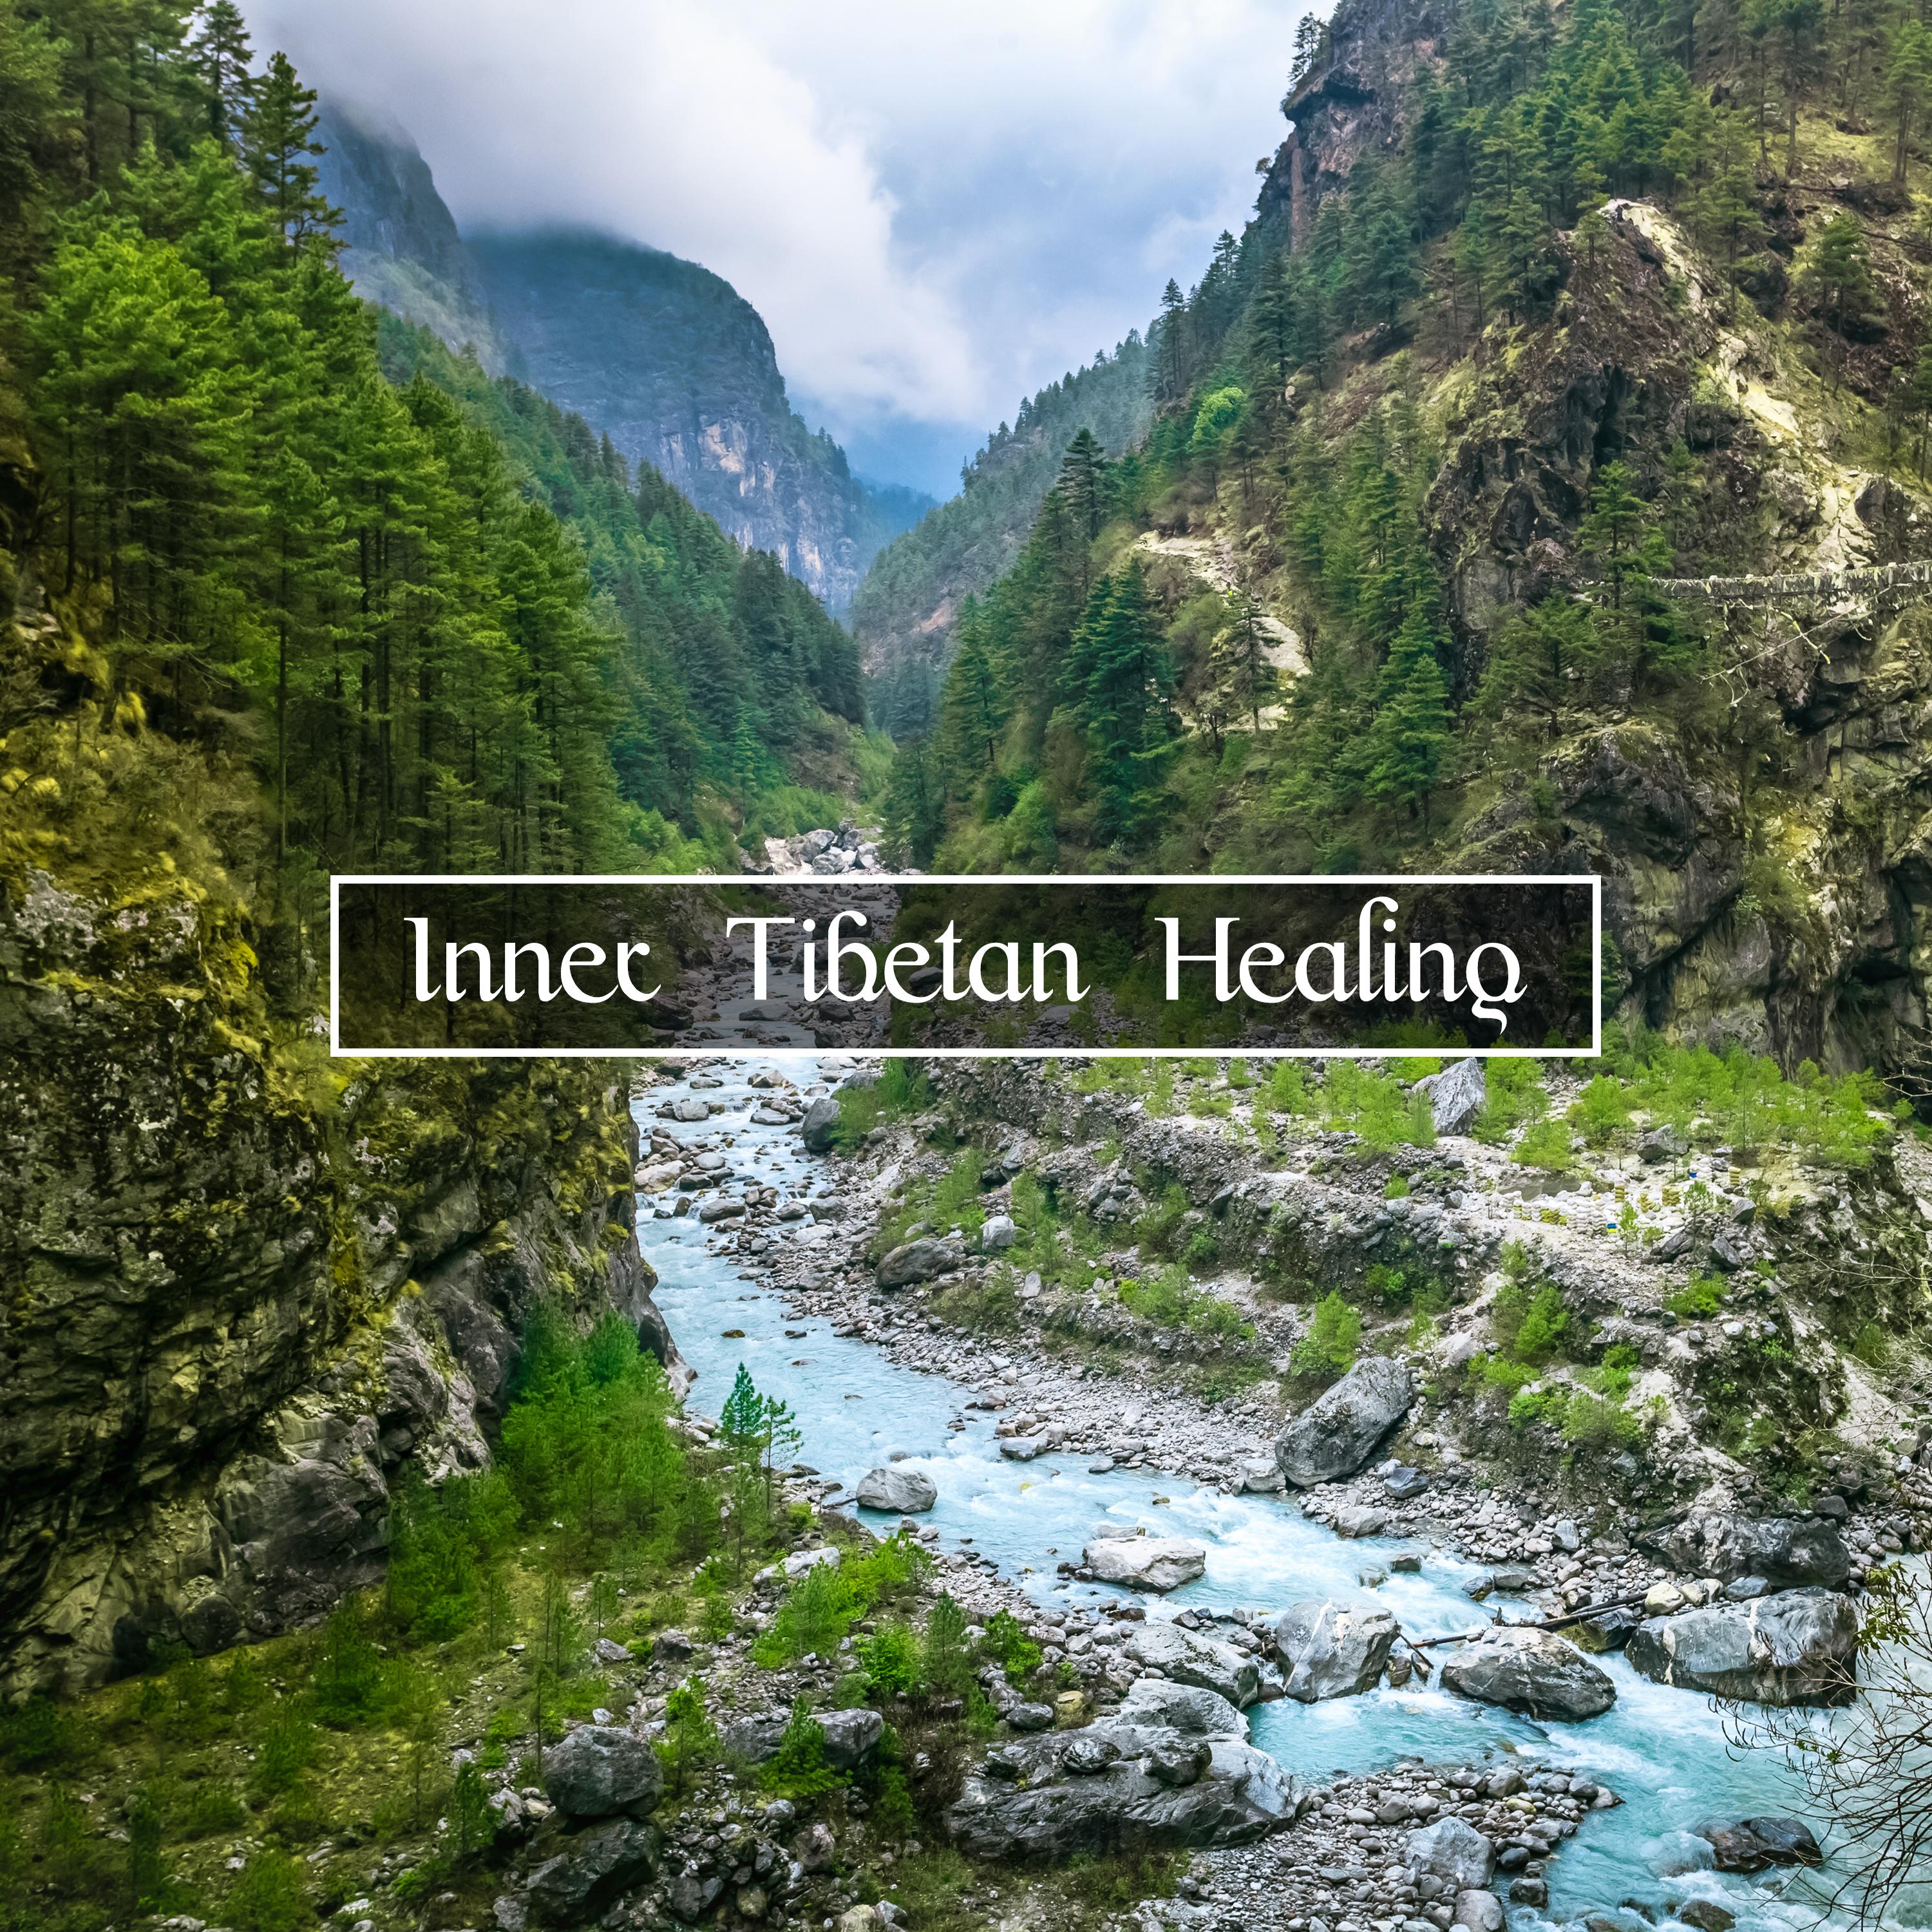 Inner Tibetan Healing